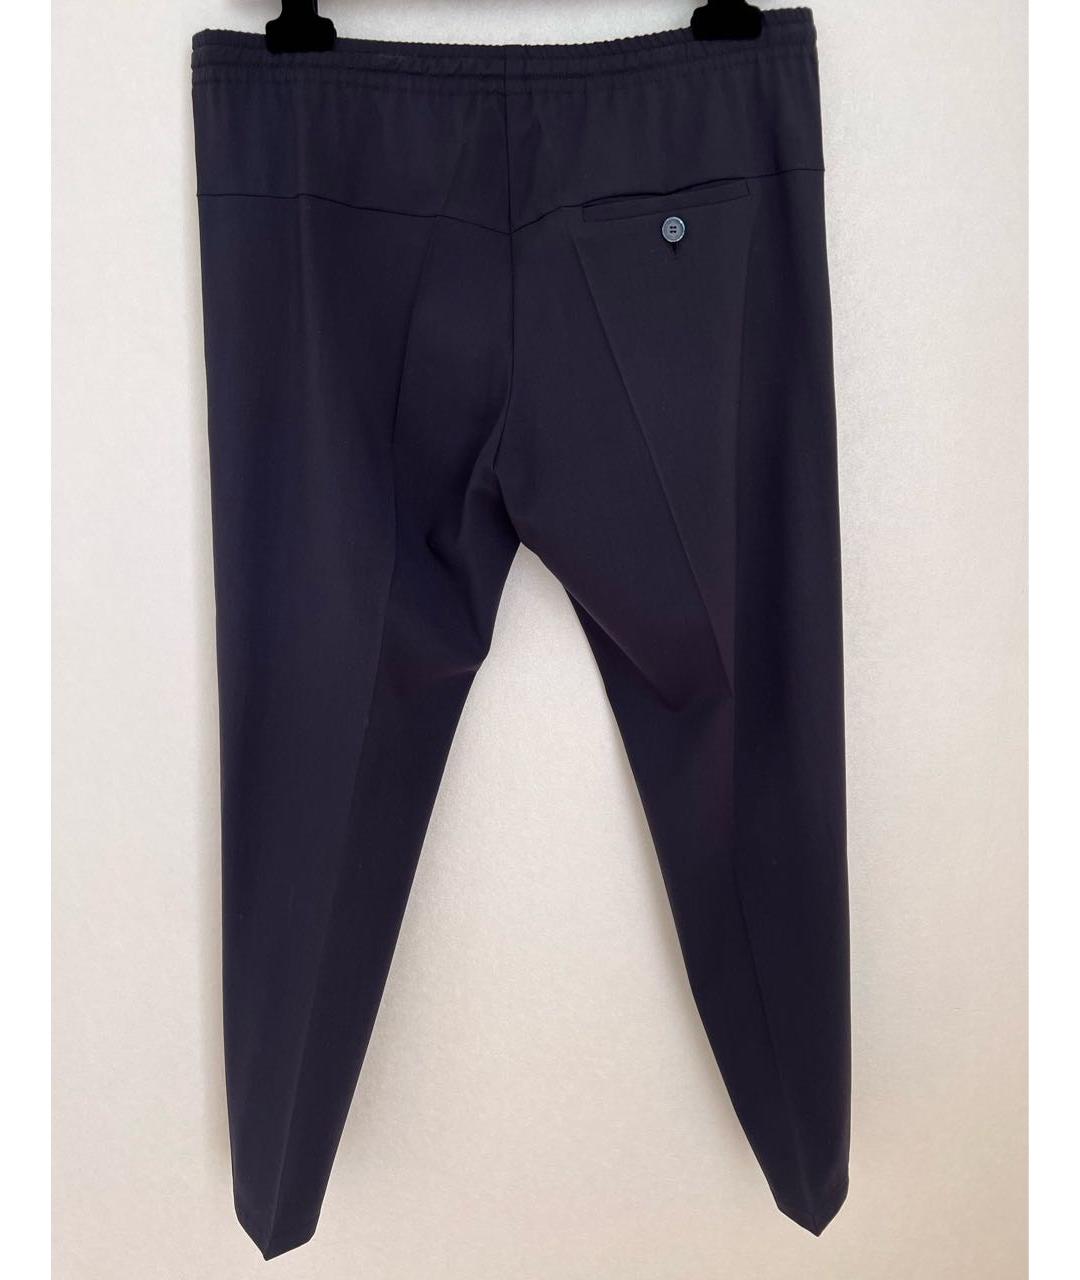 LES COPAINS Темно-синие шерстяные брюки узкие, фото 2